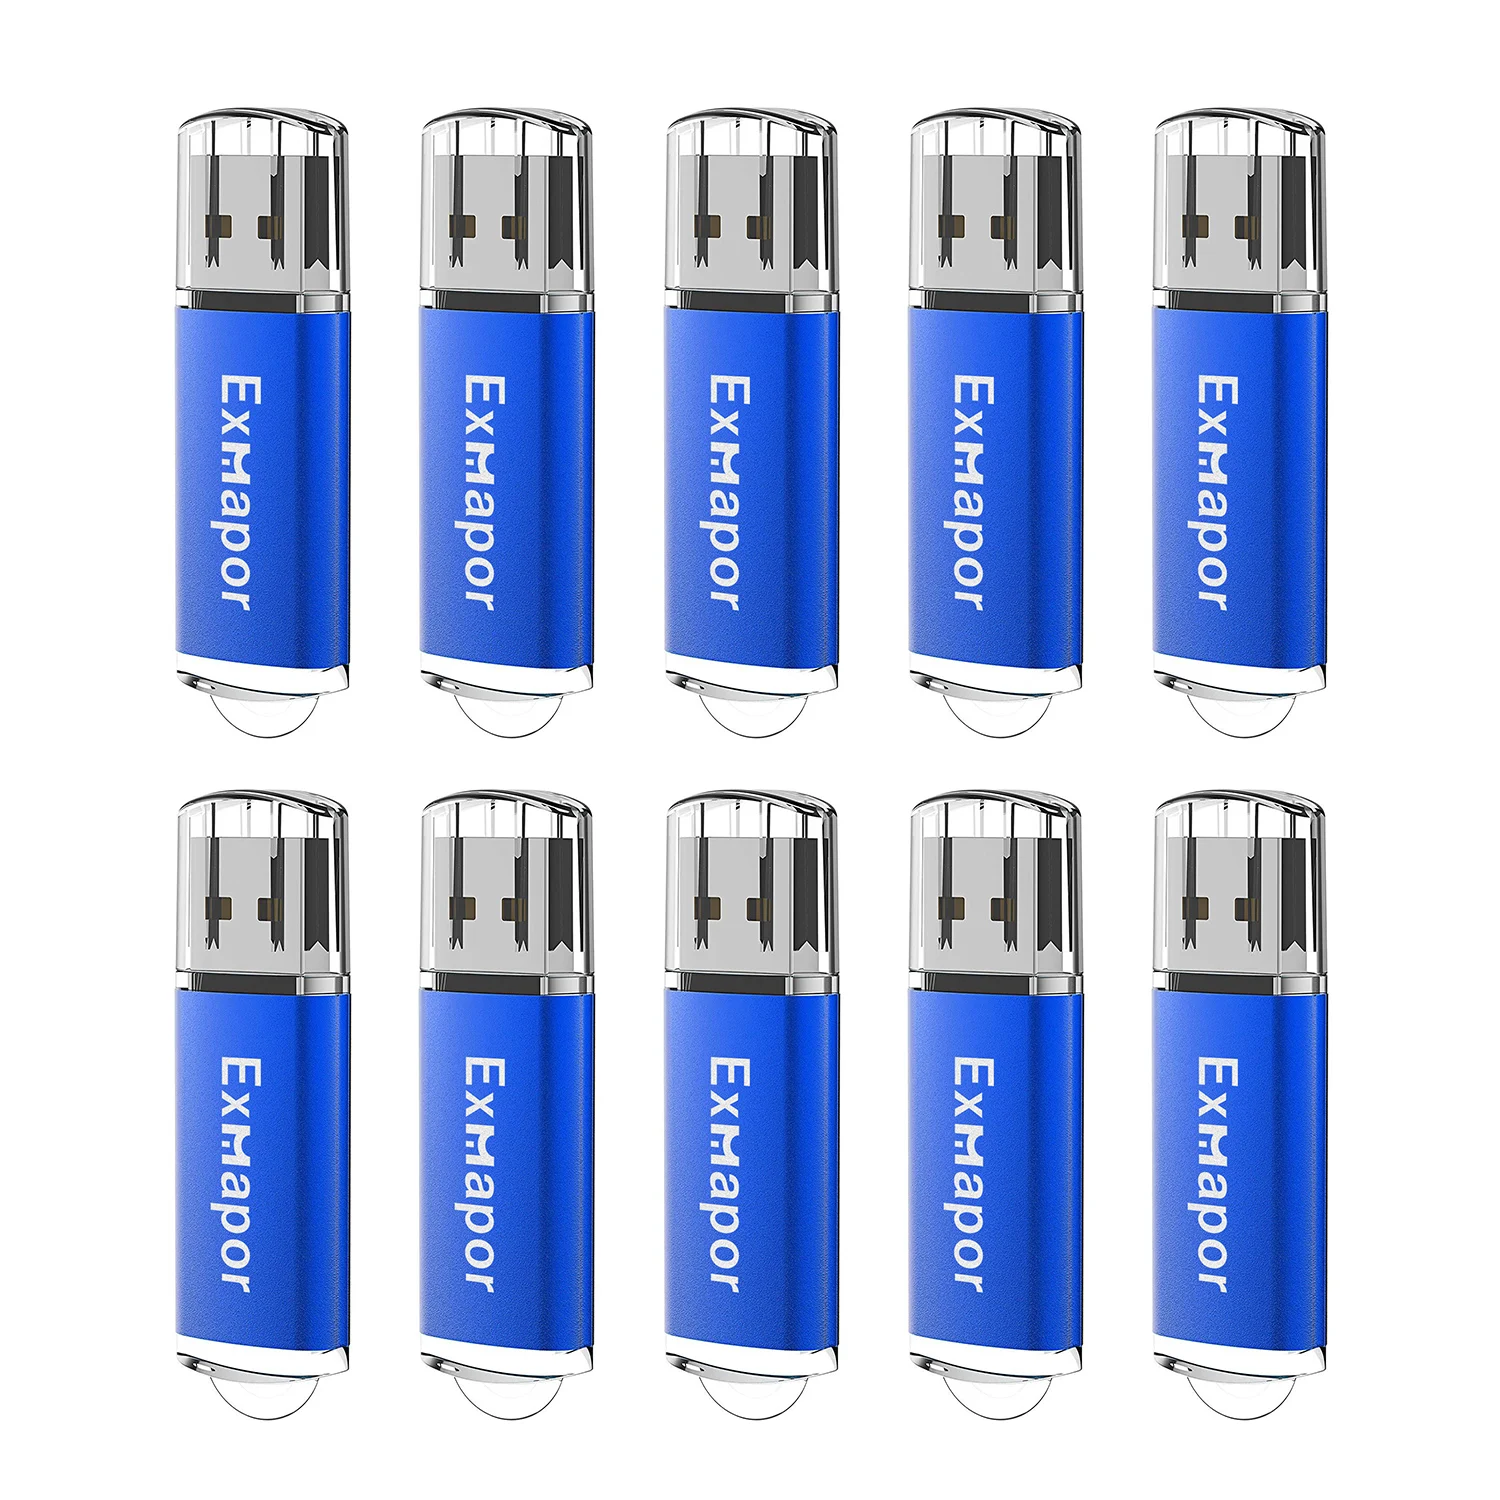 

32GB USB Flash Drive 10 Pack,USB Drives 16GB Exmapor Memory Stick Rectangle Blue Flash Drives 8GB USB 2.0 Pendrive 4GB 2GB 1GB